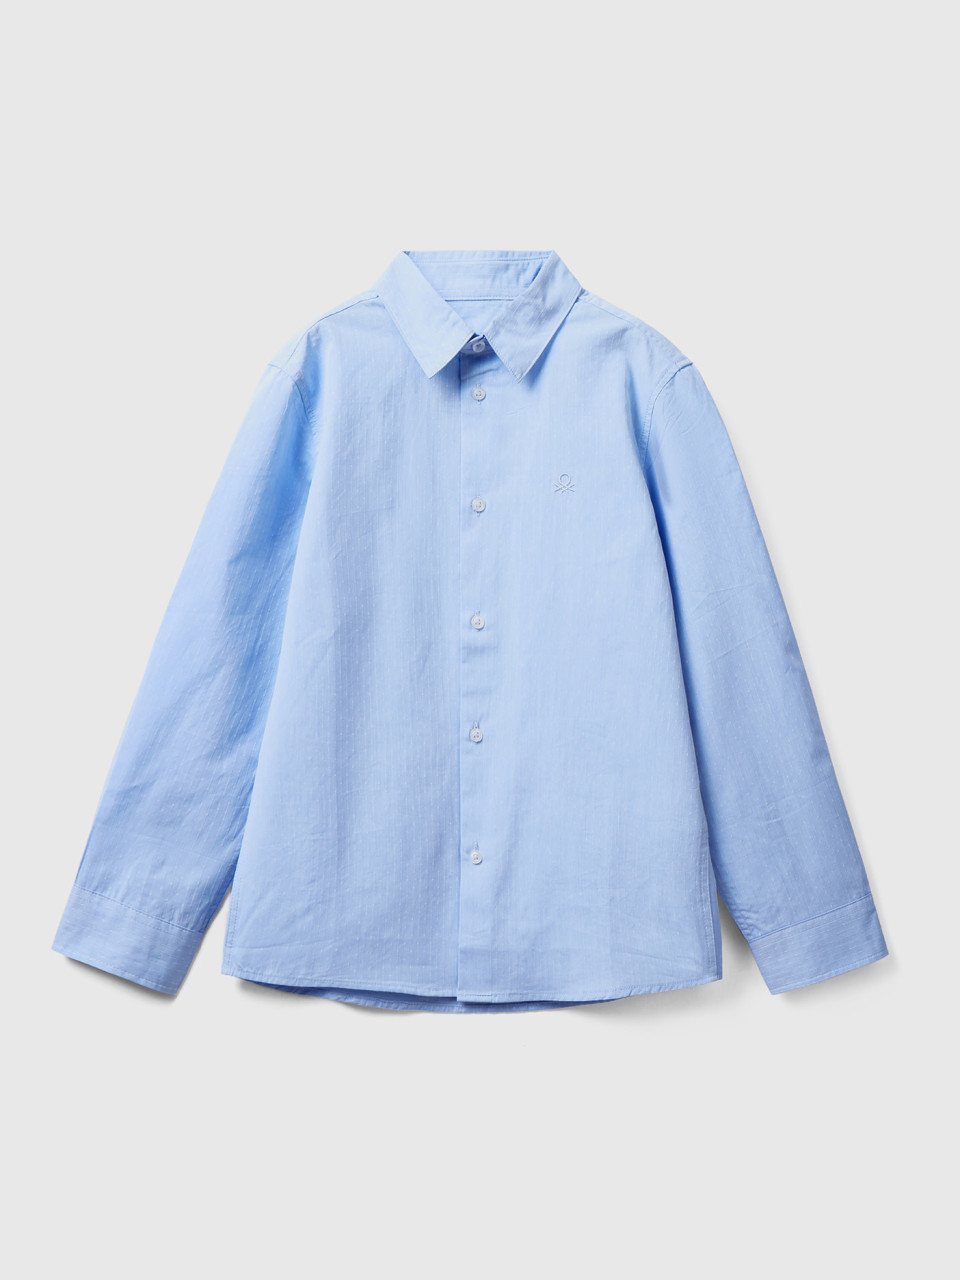 Benetton, Classic Shirt In Pure Cotton, Sky Blue, Kids